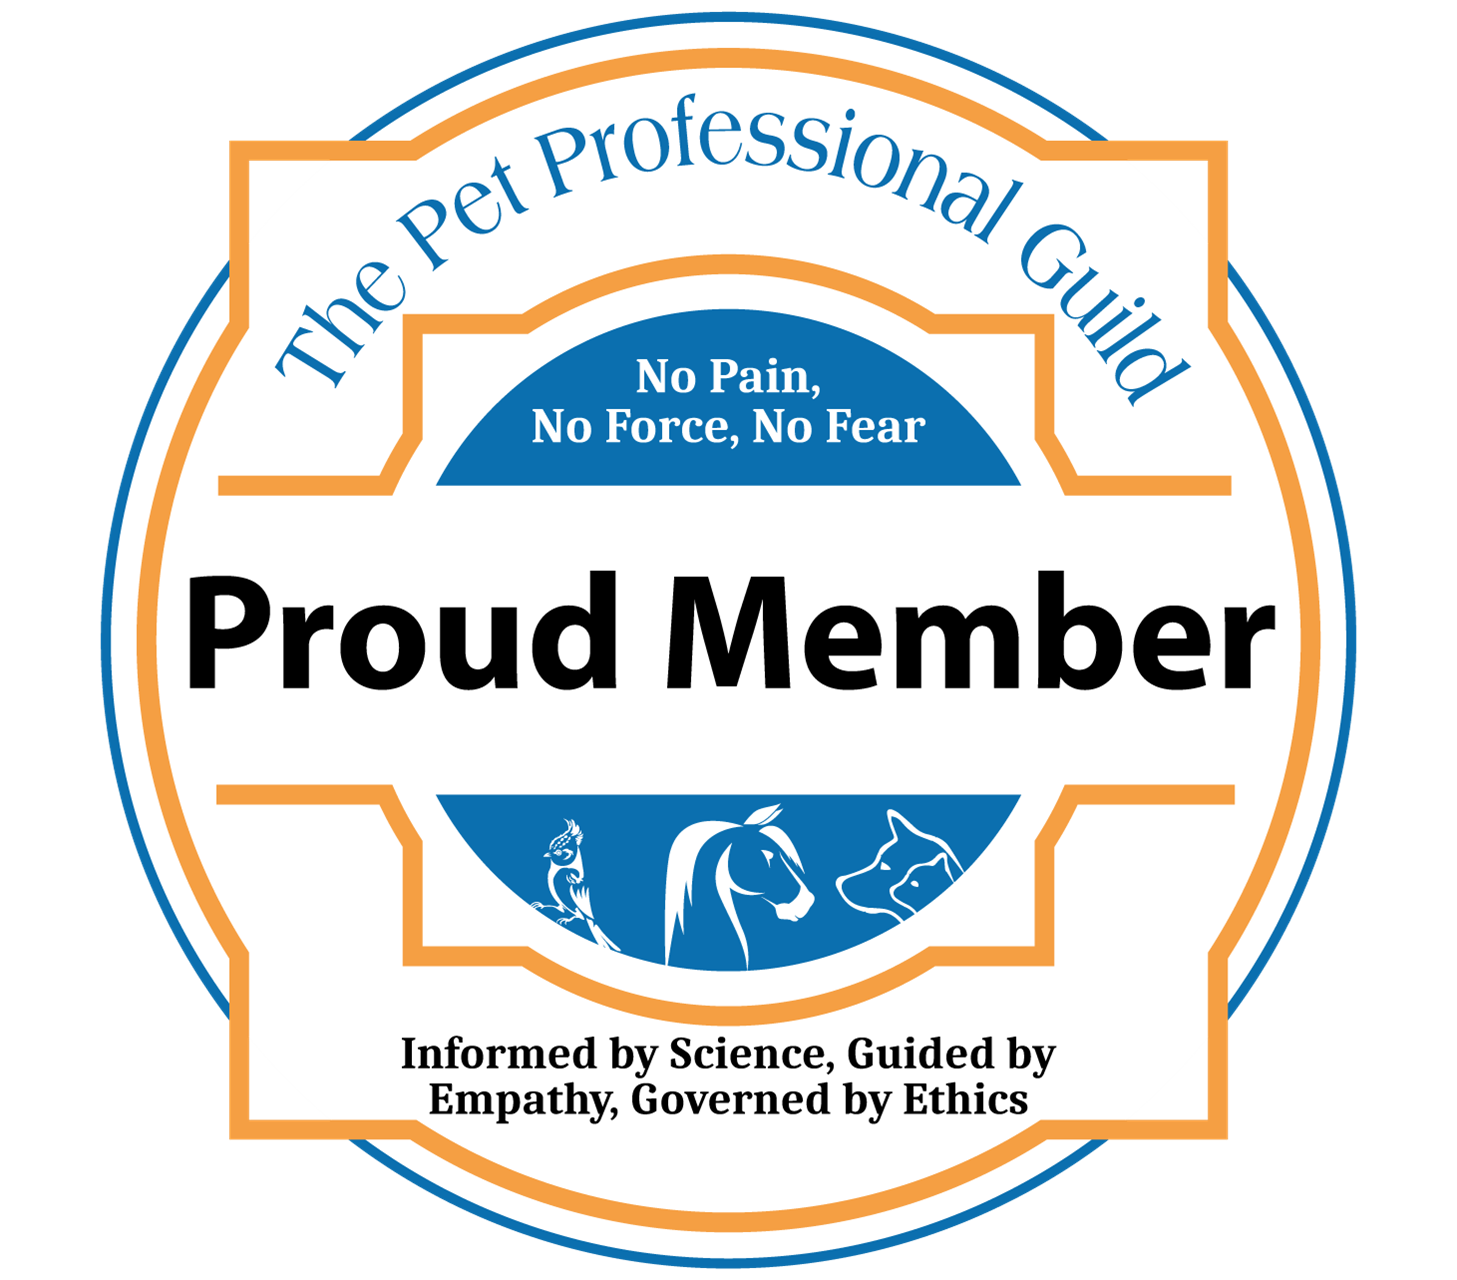 PPG-badge-member